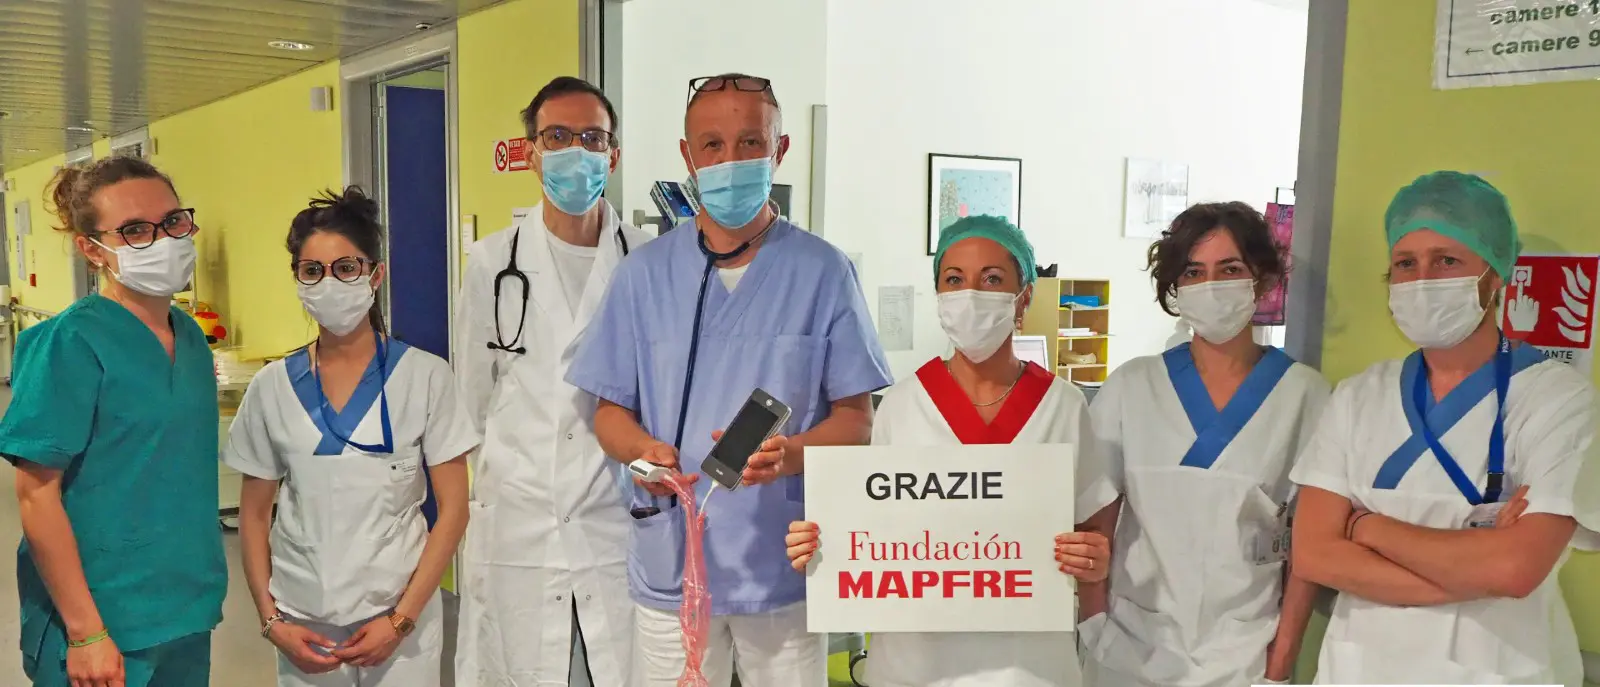 O setor de saúde italiano é apoiado pela Verti, graças à Fundación MAPFRE